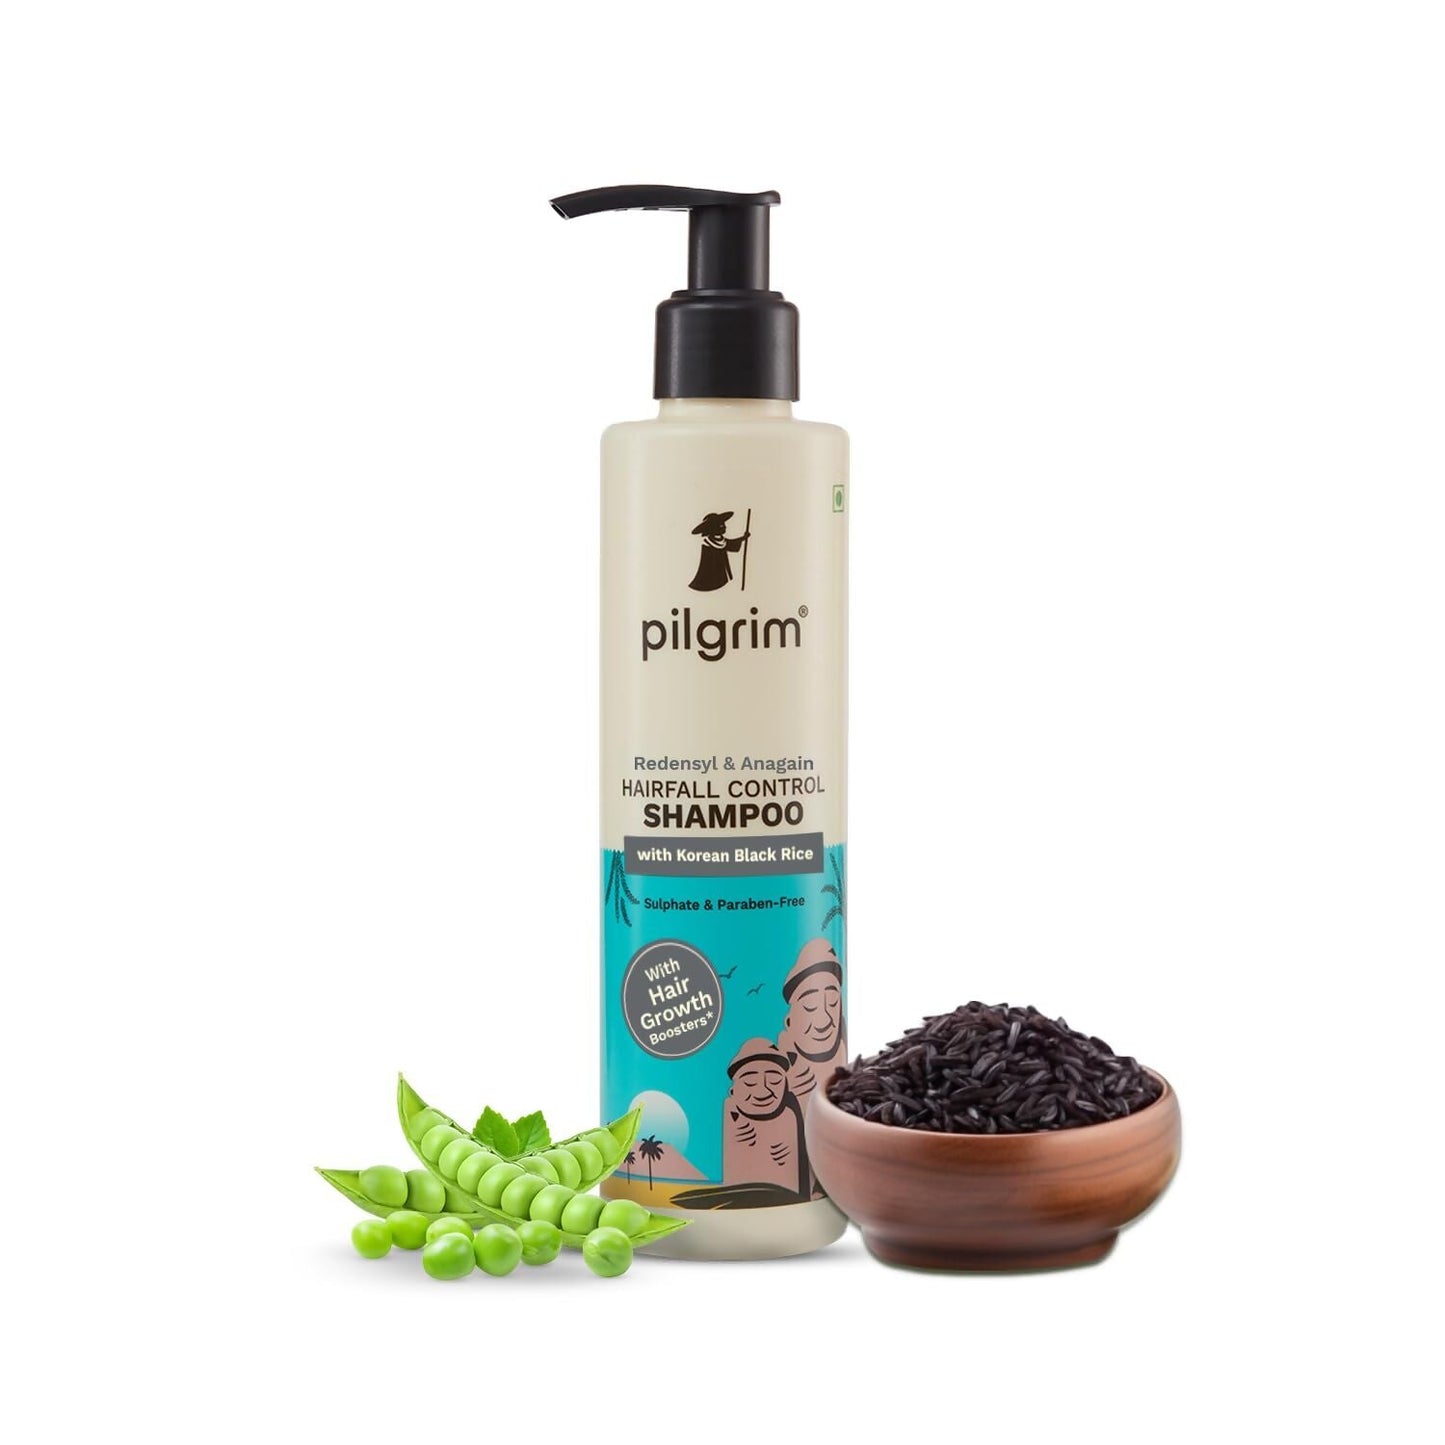 Pilgrim Redensyl & Anagain Hairfall Control Shampoo with Korean Black Rice